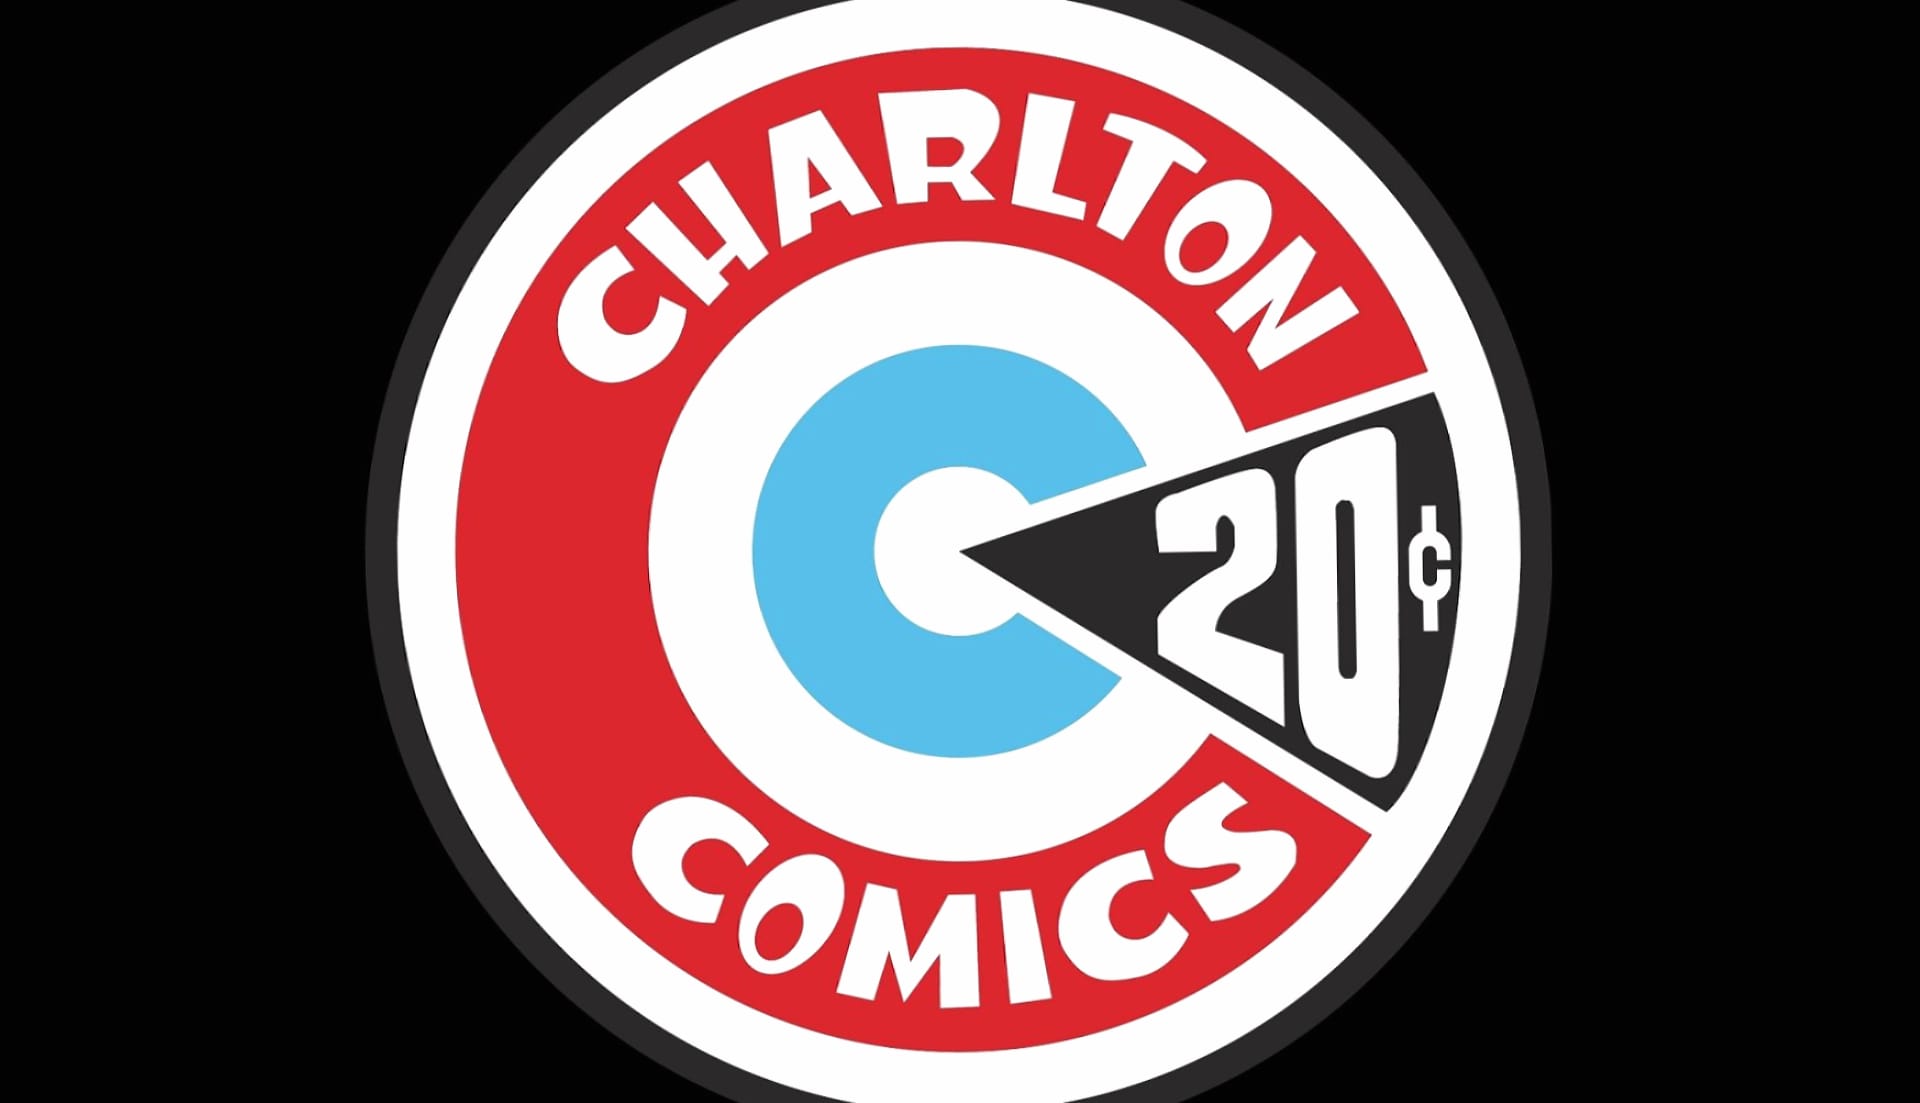 charlton Comics at 1280 x 960 size wallpapers HD quality